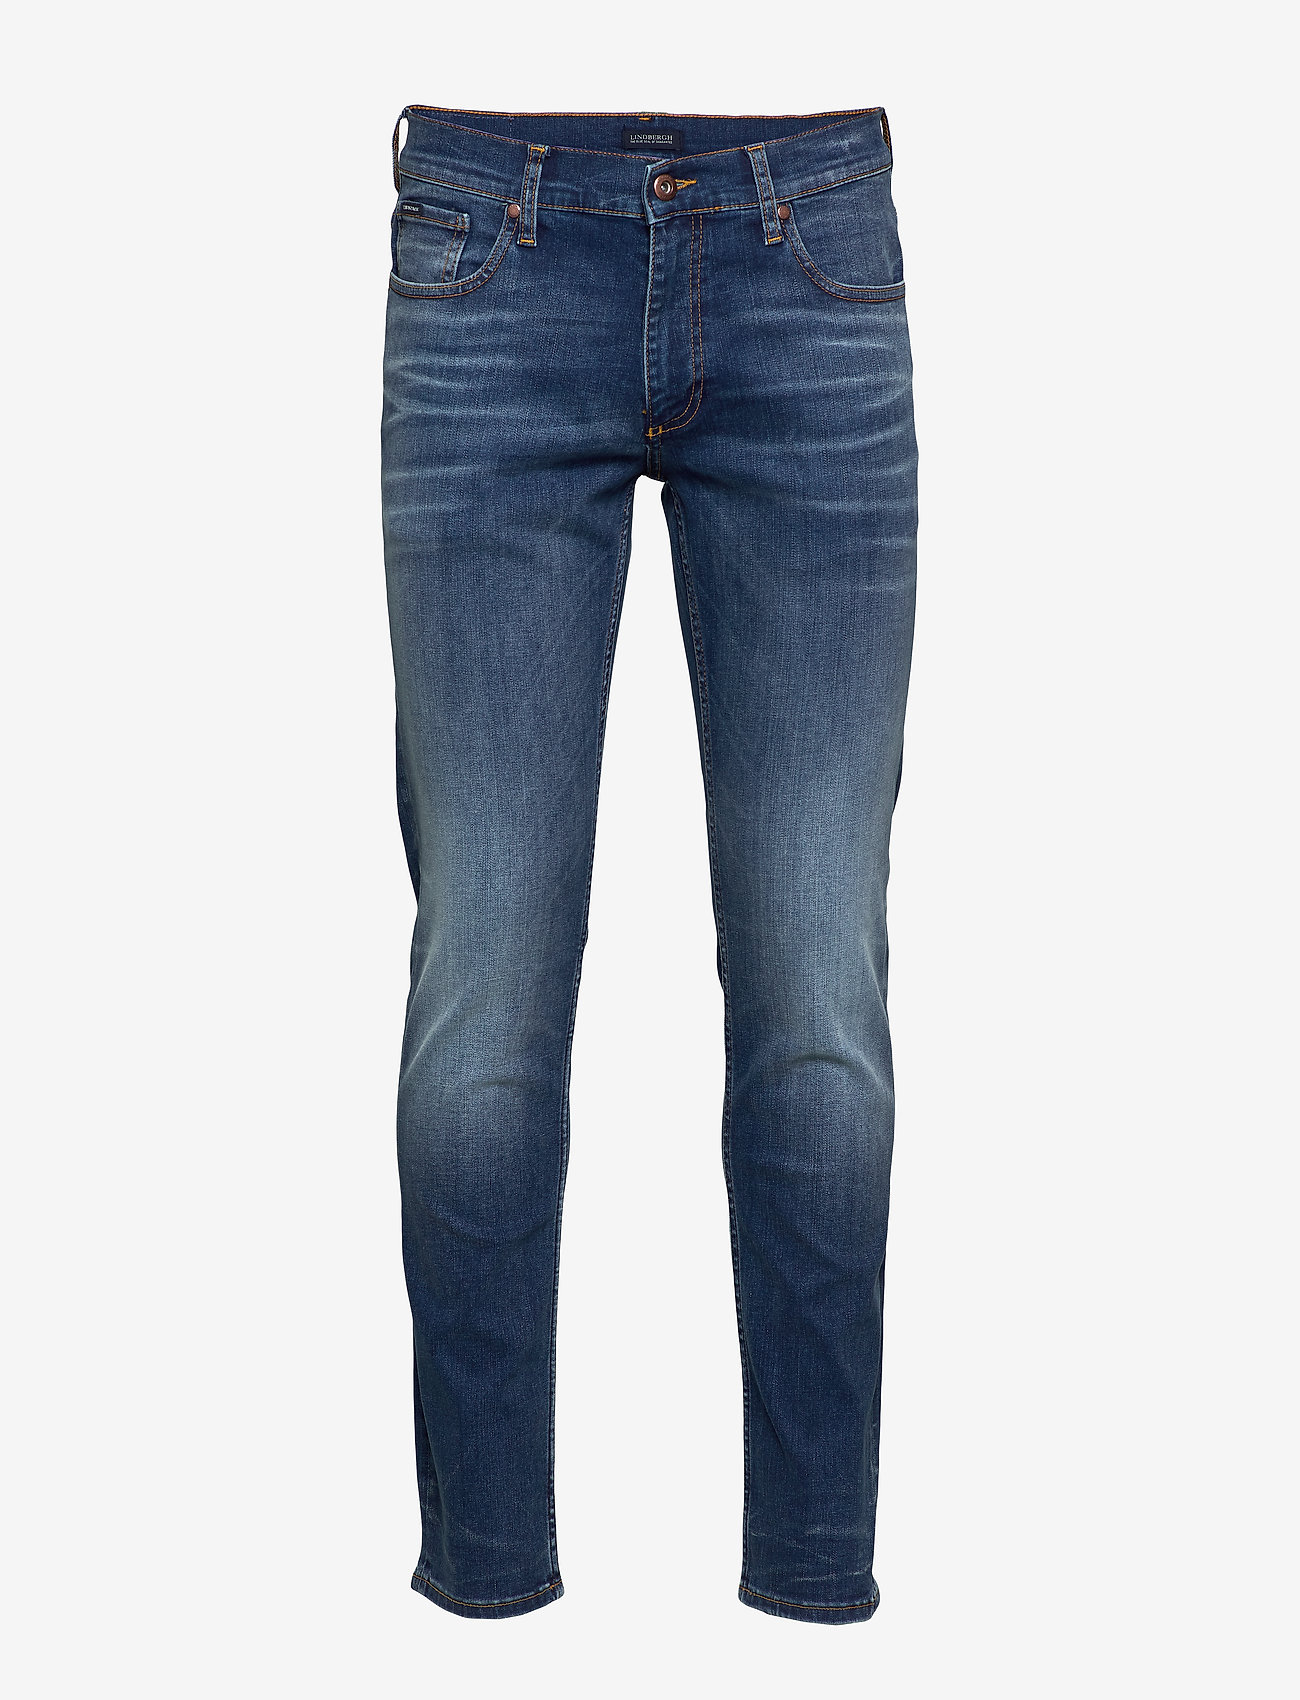 Lindbergh - Superflex jeans original blue - Tap - nordischer stil - original blue - 1